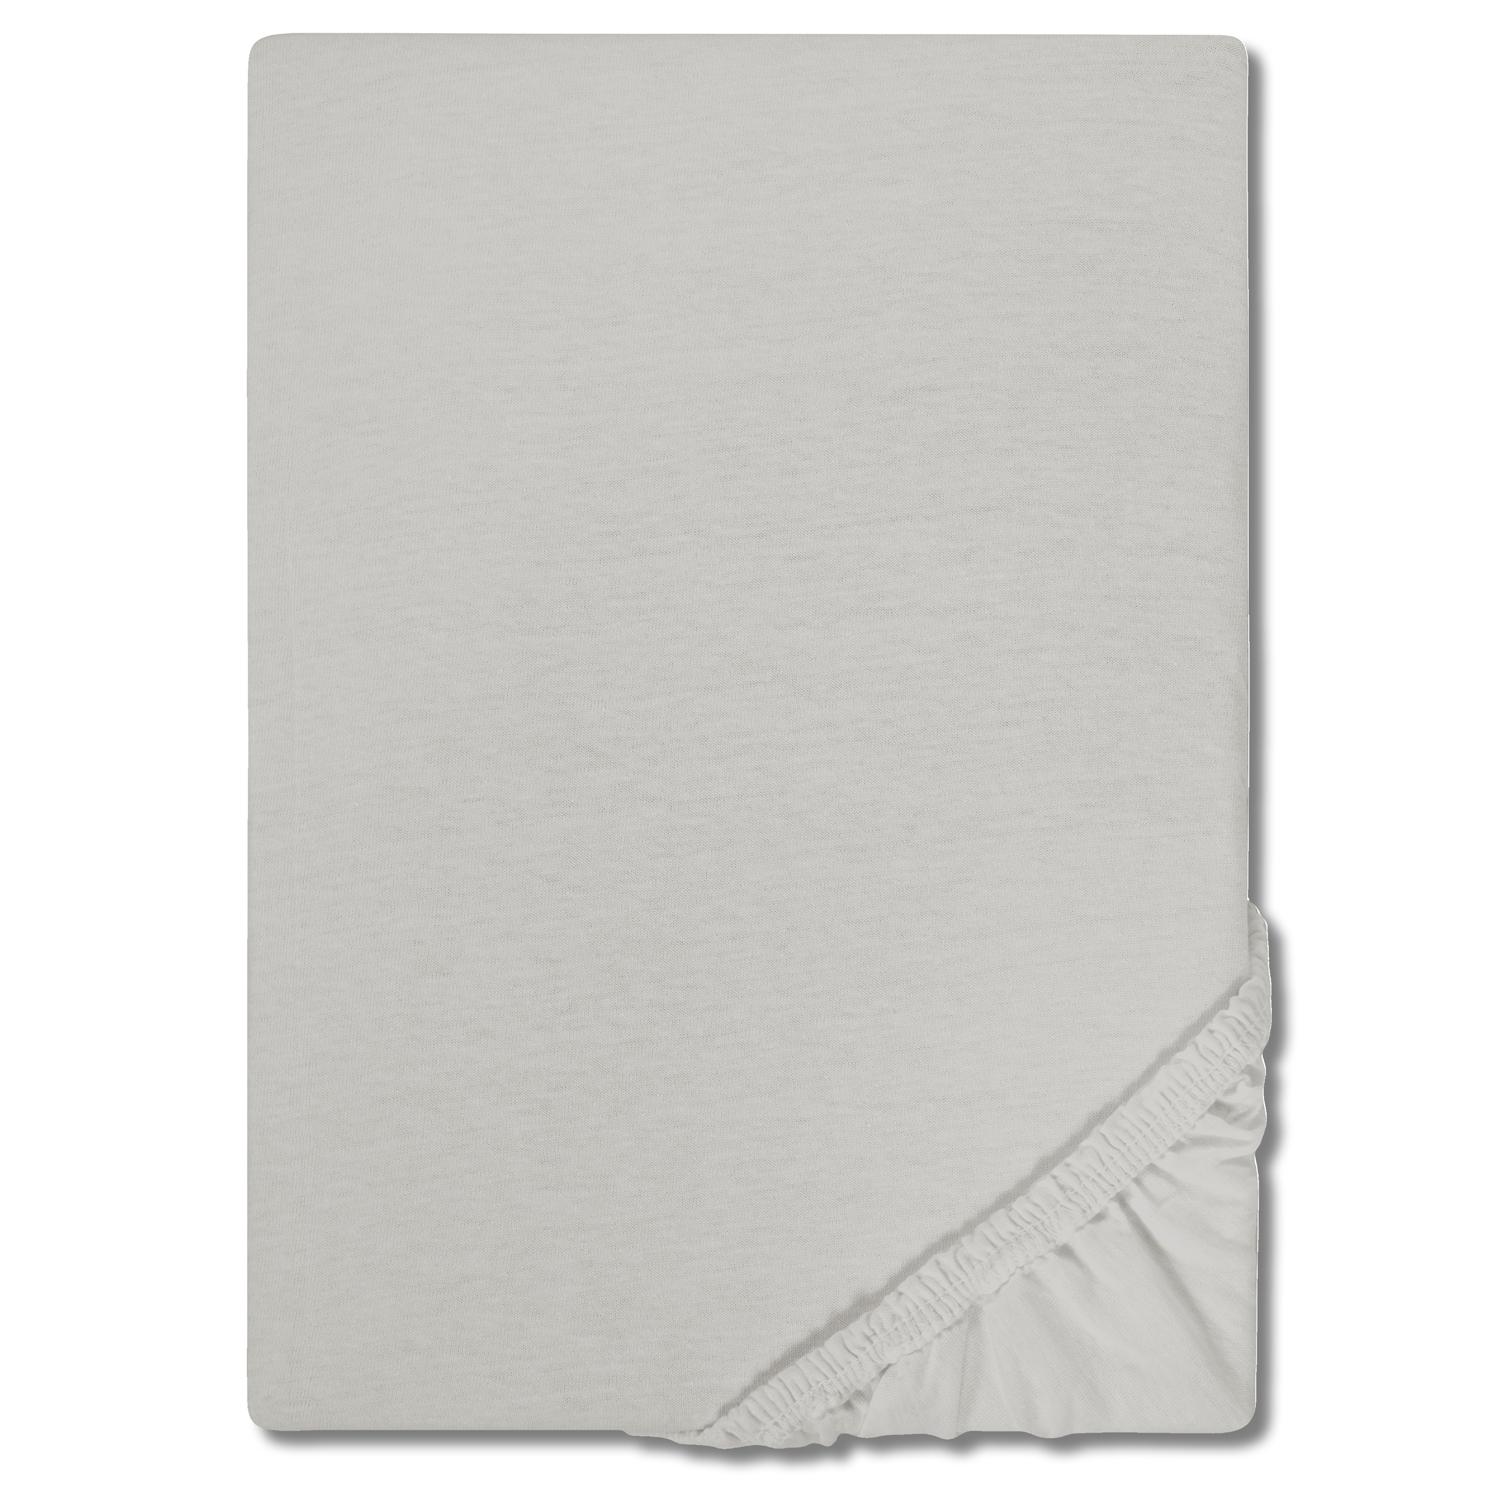 CloudComfort Basic Spannbettlaken Jersey-Stretch silber grau 120 x 200 cm